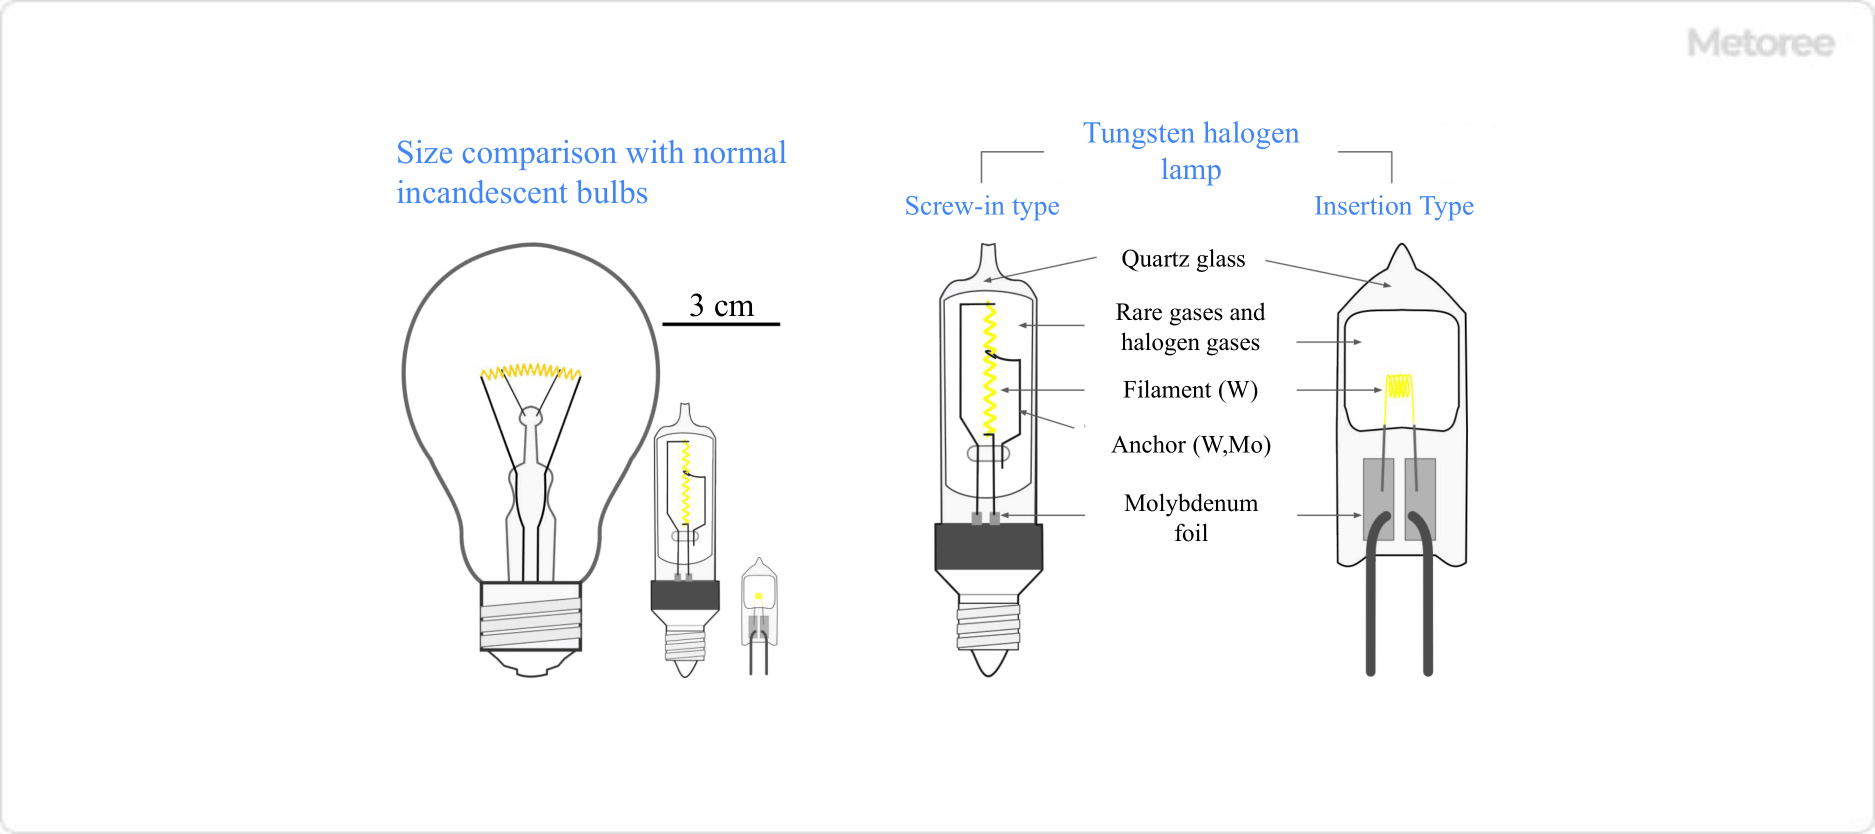 Figure 2. Incandescent and halogen lamps